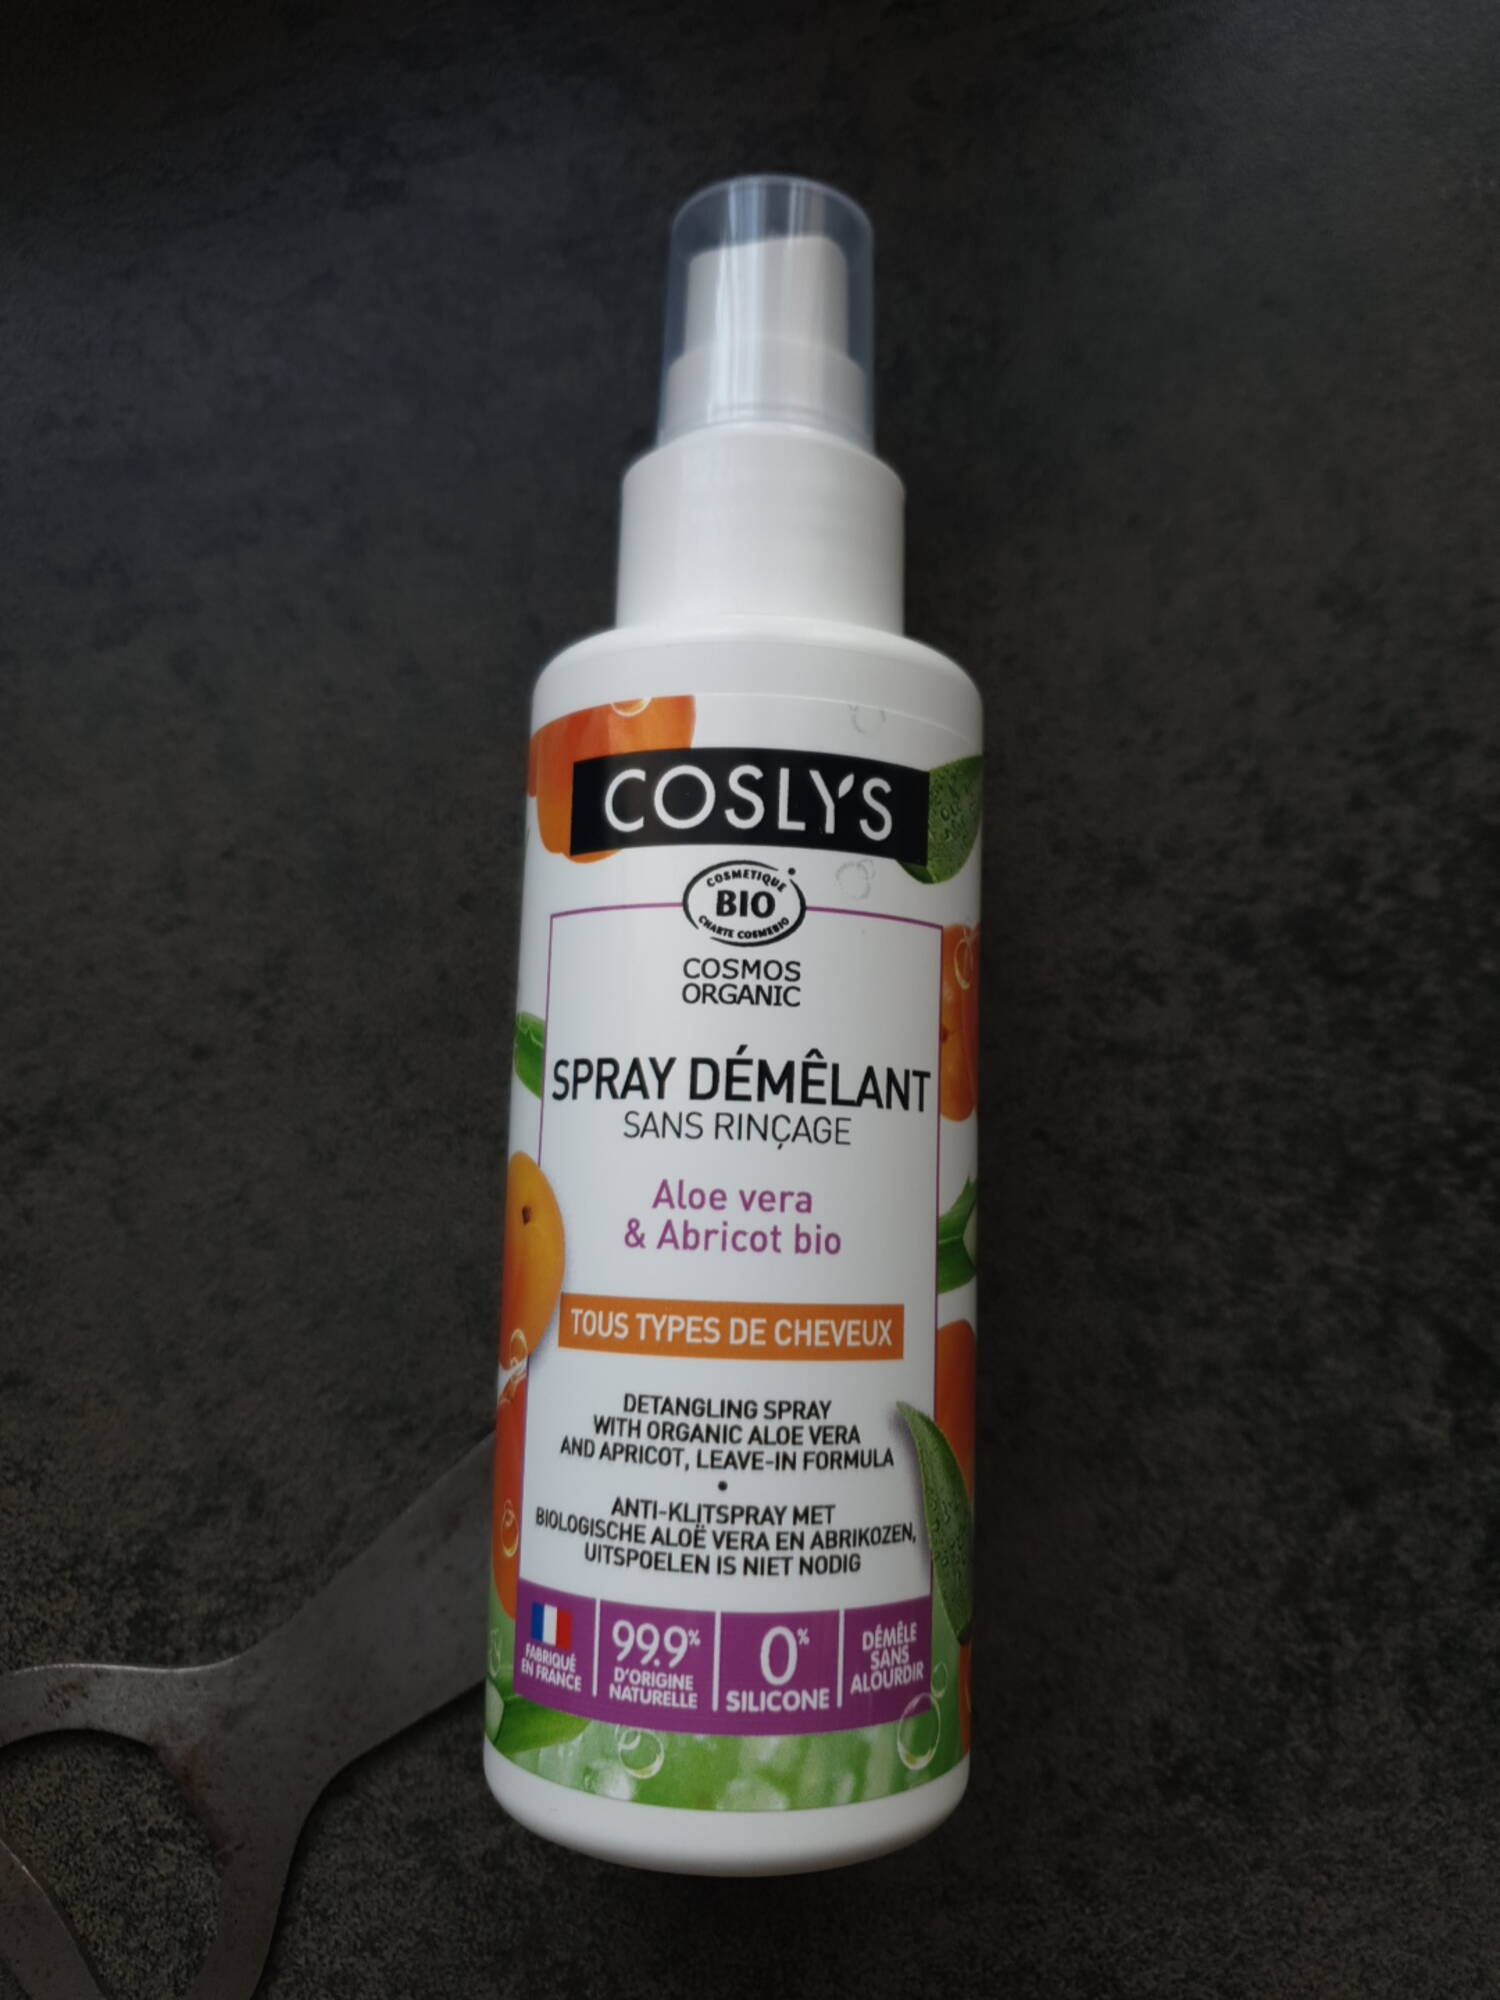 COSLYS - Spray démêlant sans rinçage aloe vera & abricot bio